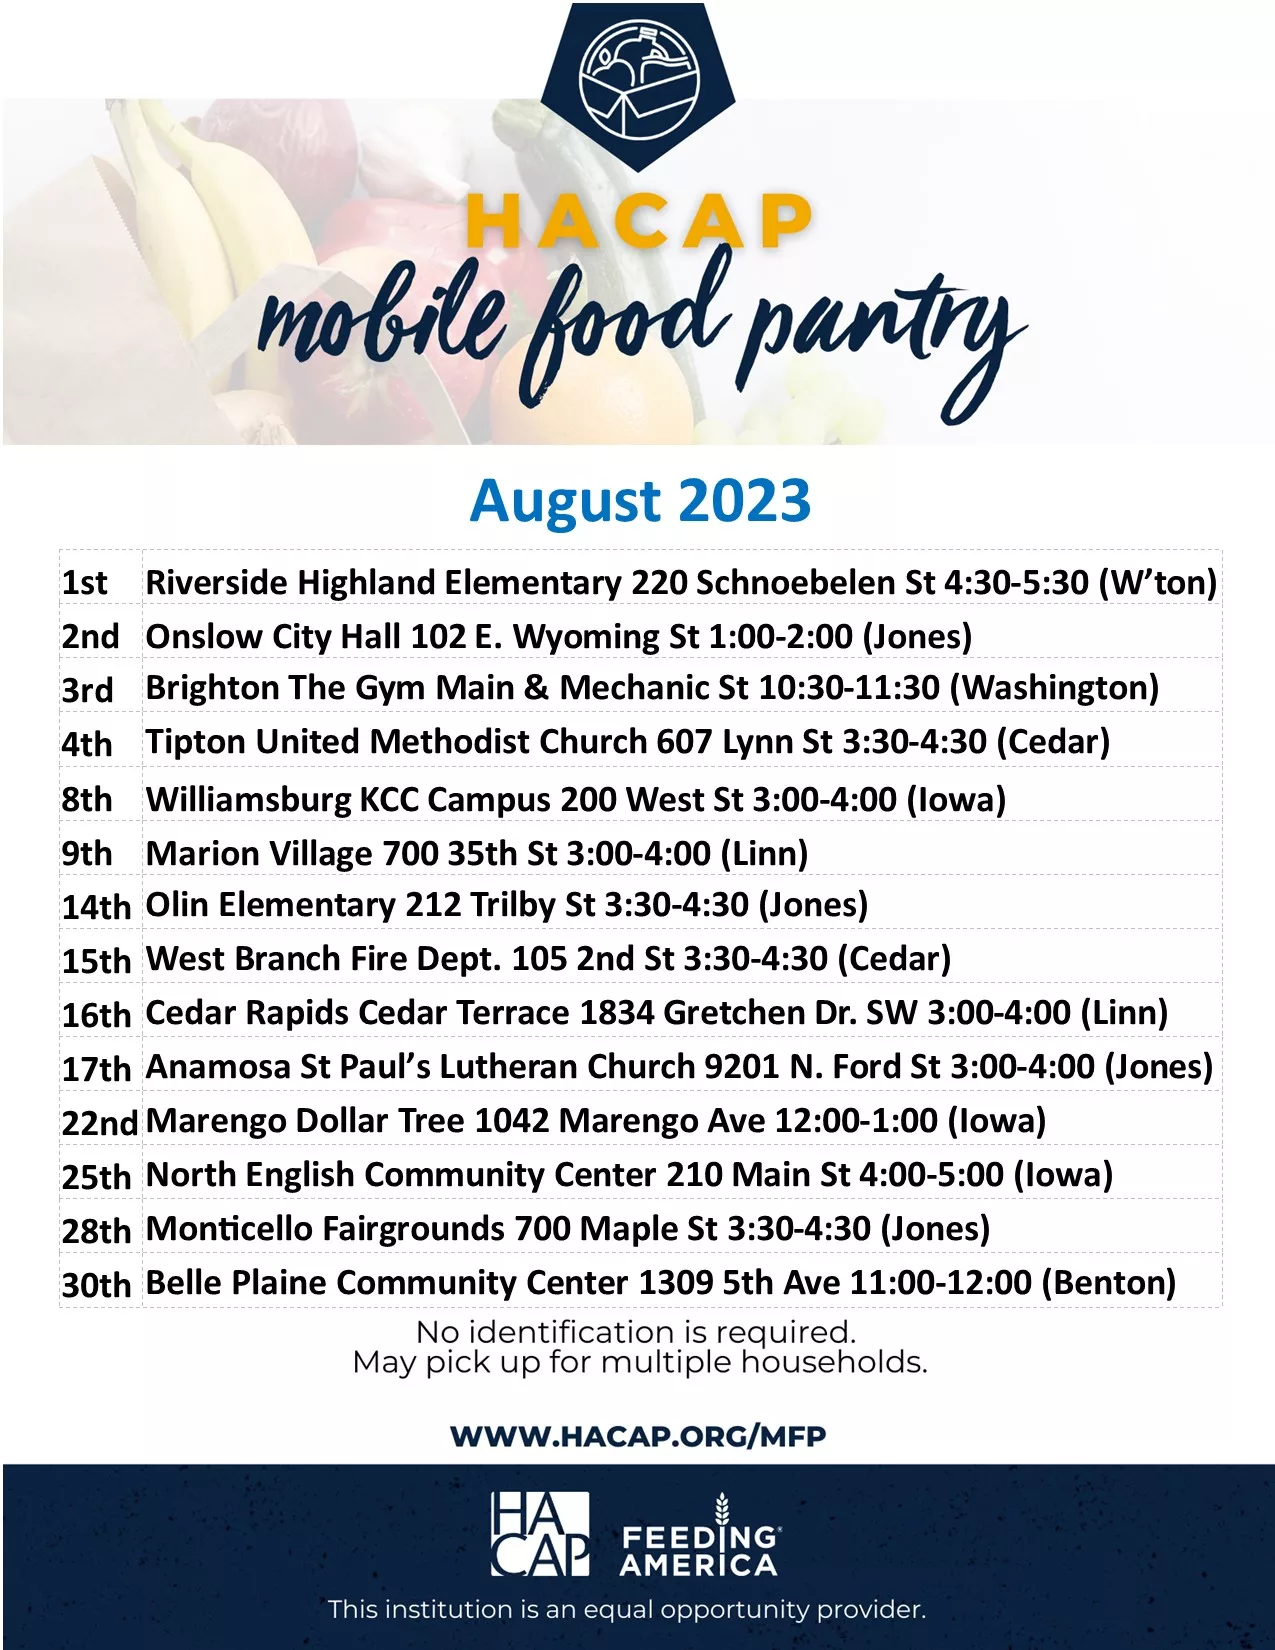 August 2023 Mobile Pantry Schedule.webp